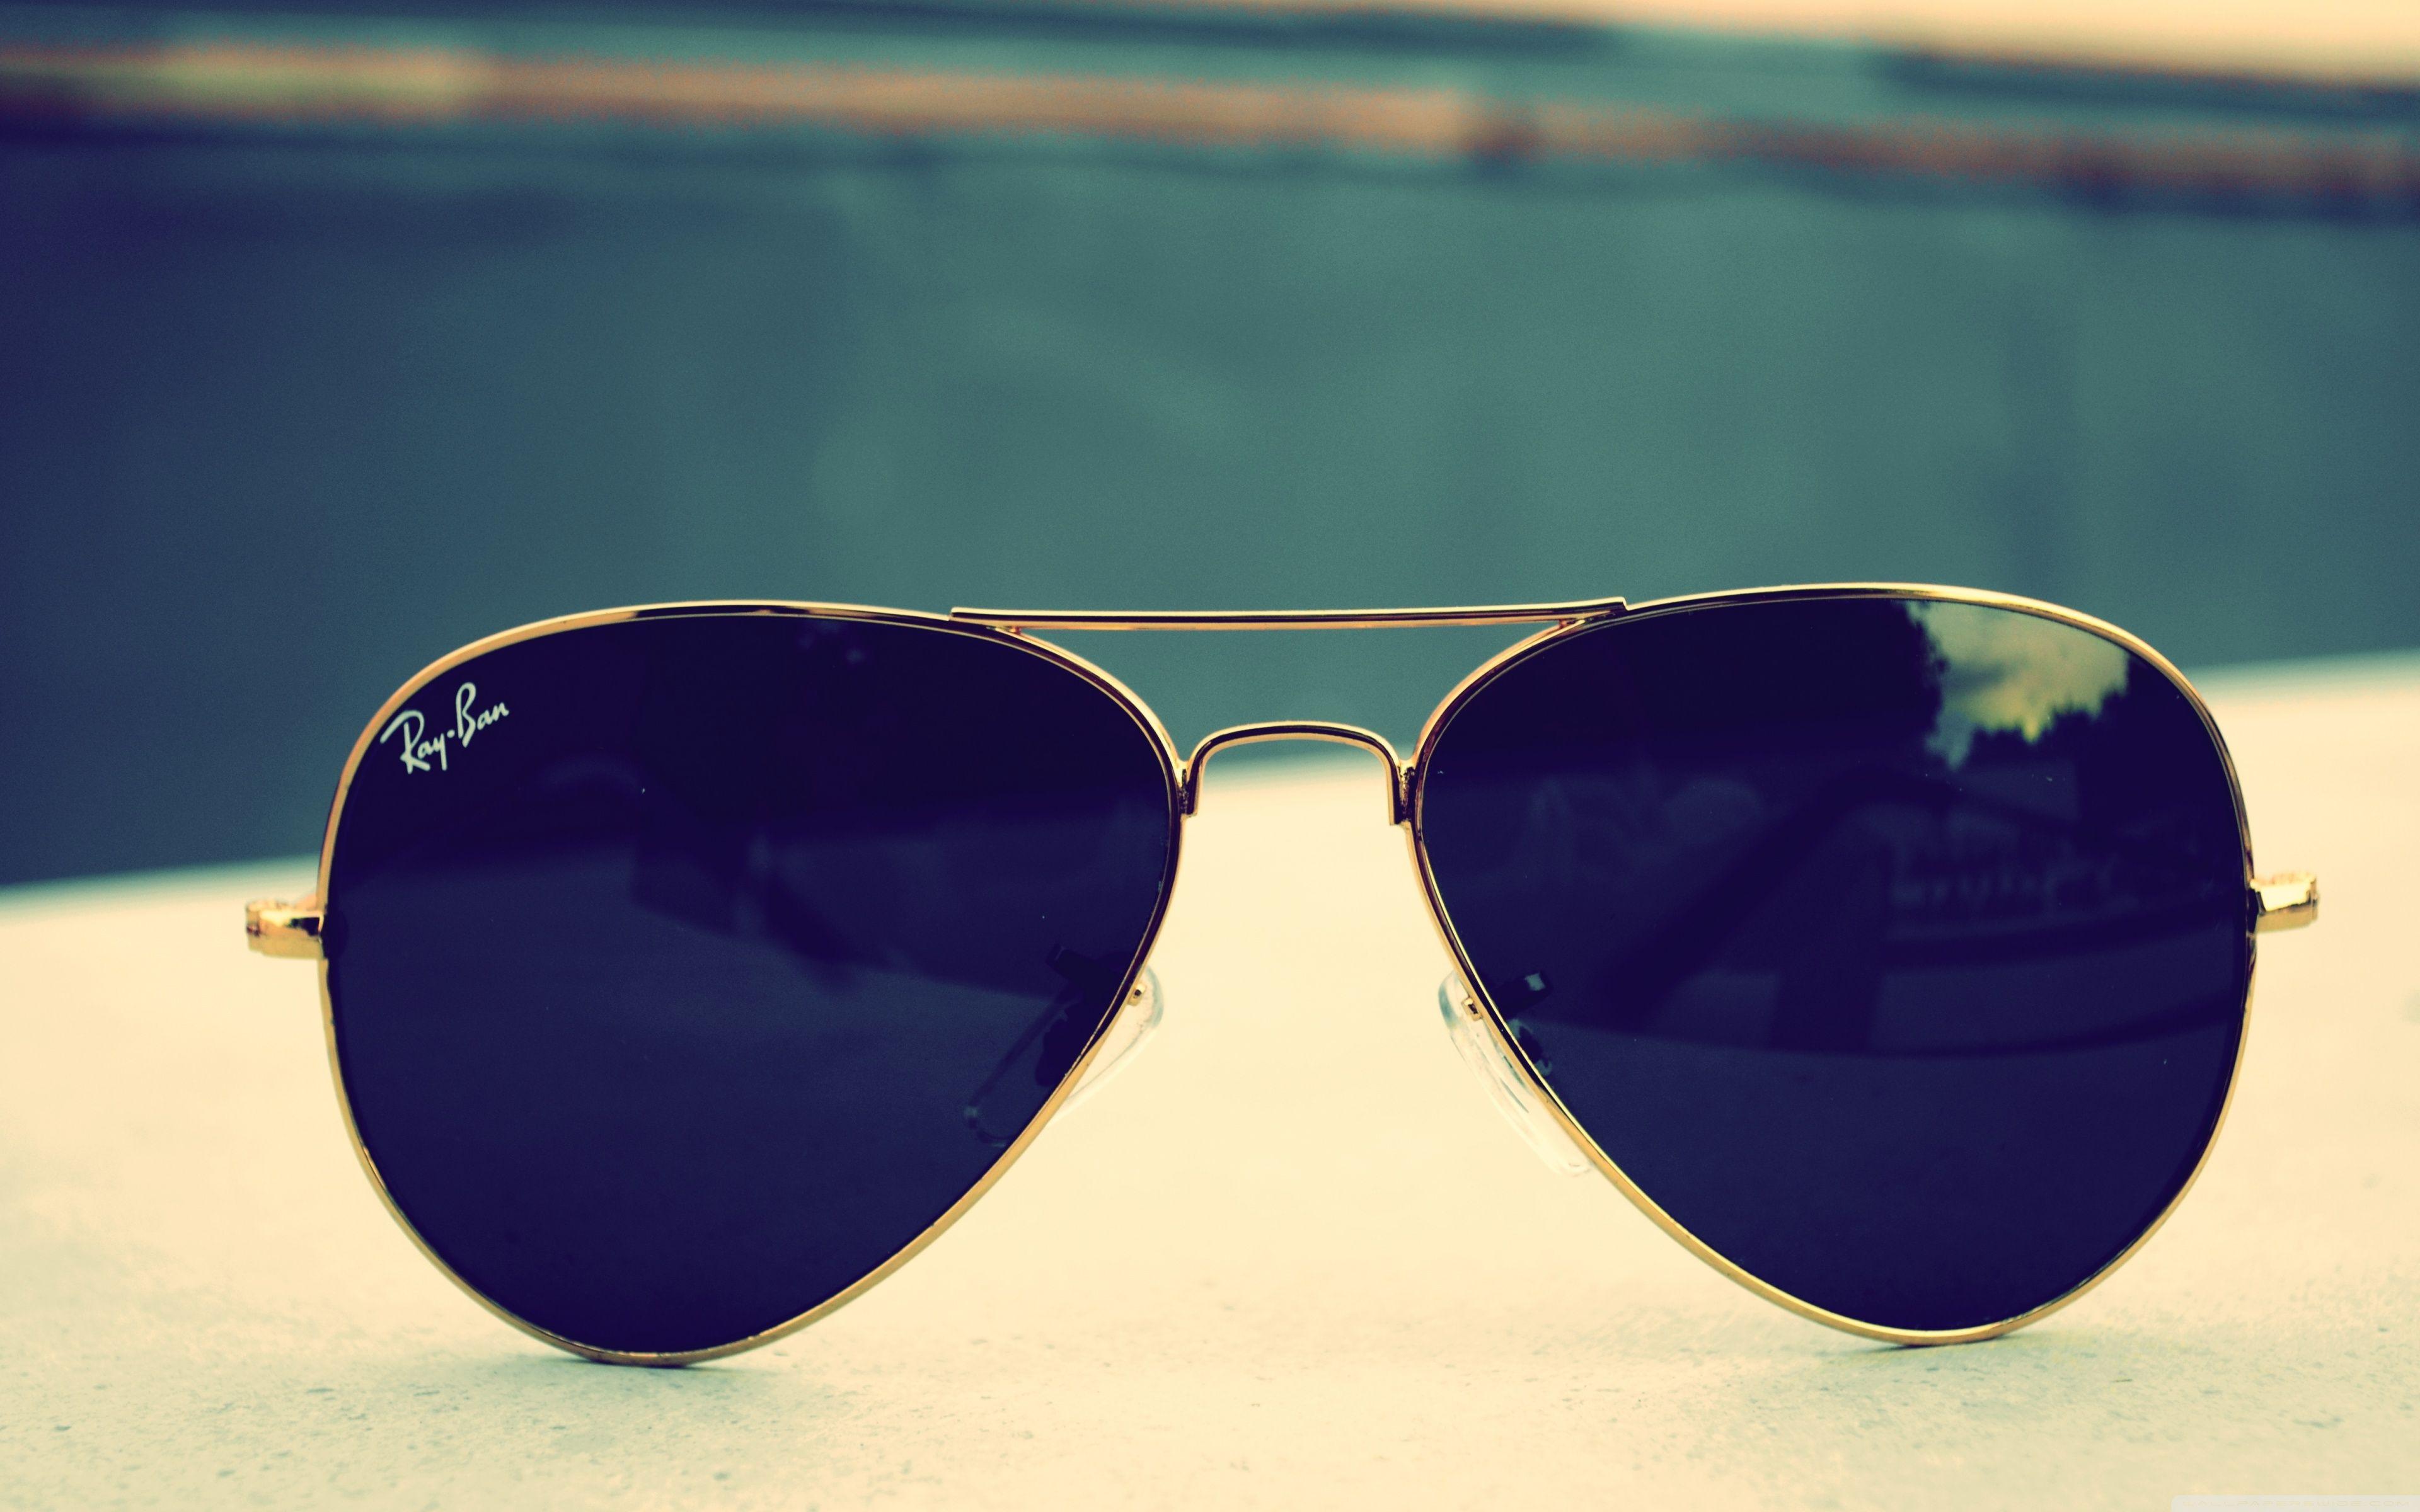 An s sunglasses